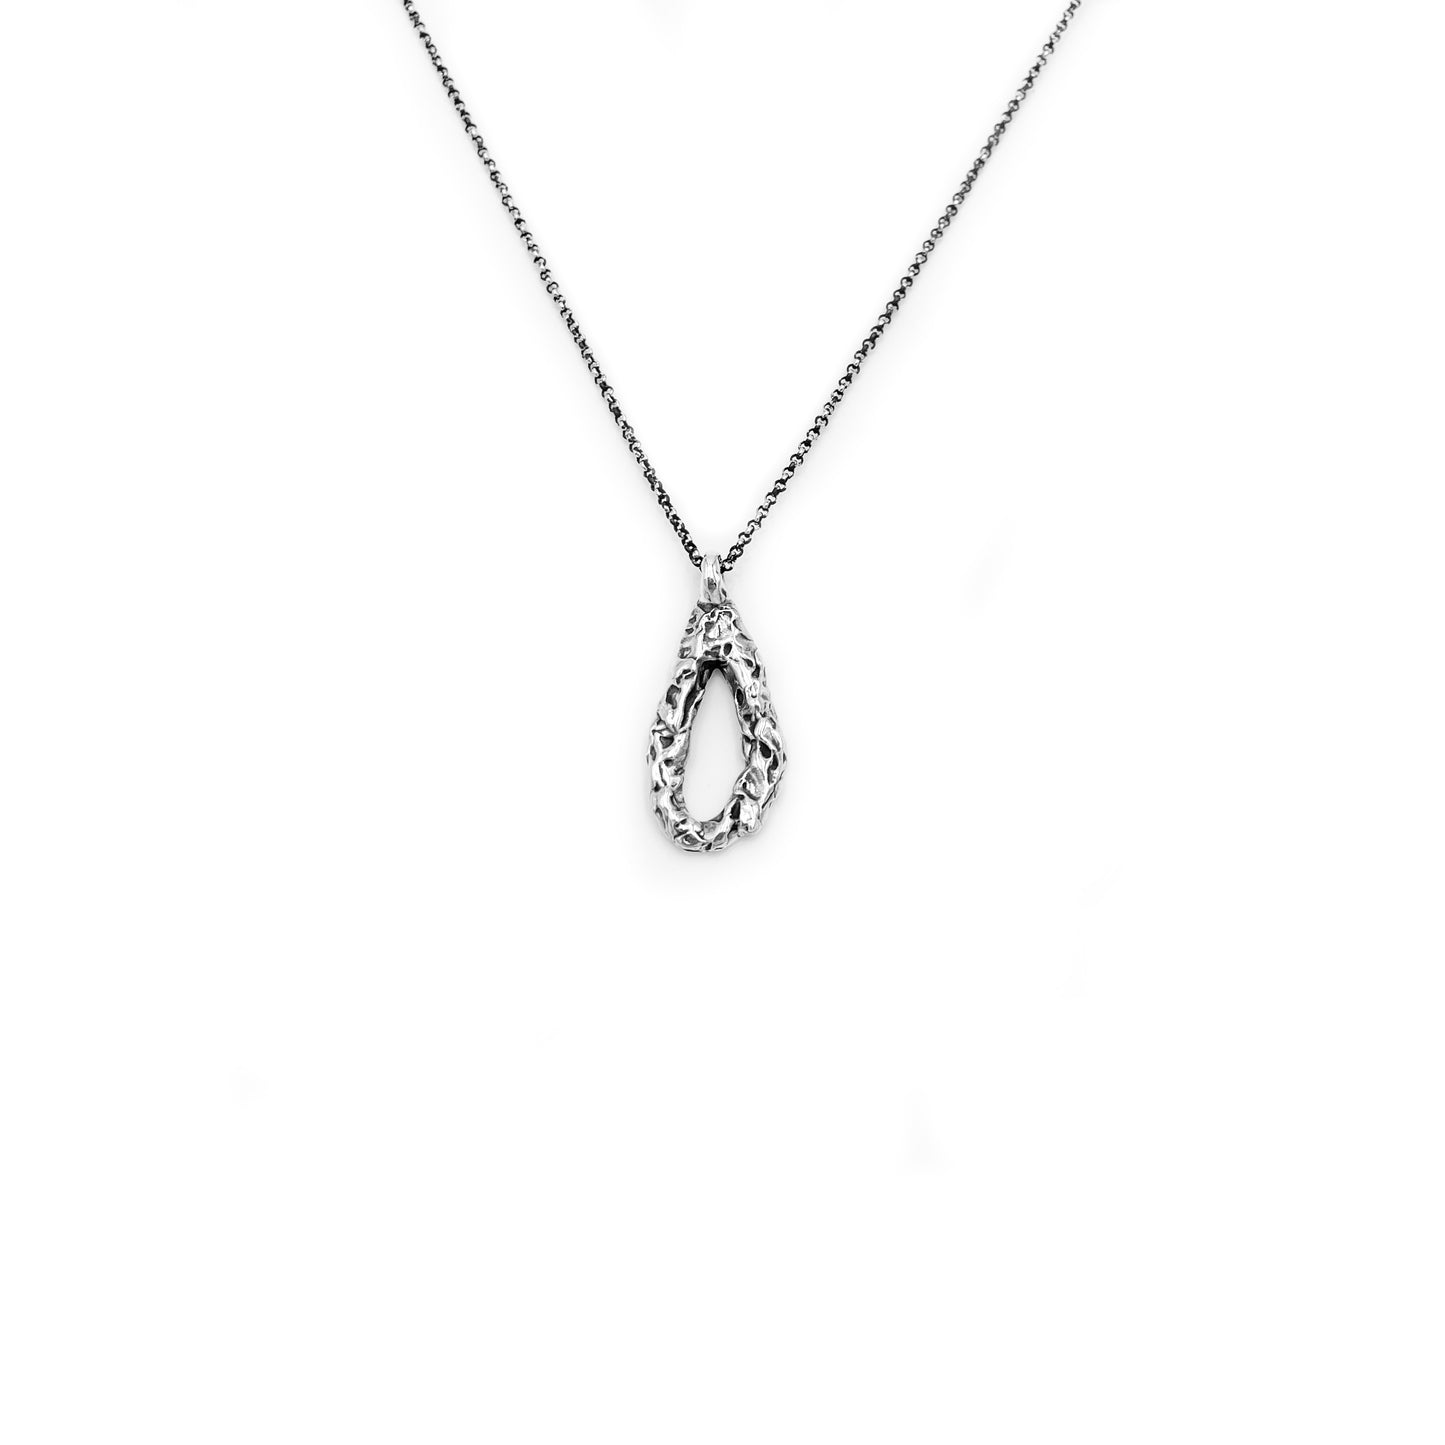 Biner Necklace - Shiny Necklace - Silver Necklace - Circular Necklace - Loop Designer Necklace - Open Necklace - Sterling Silver Necklace